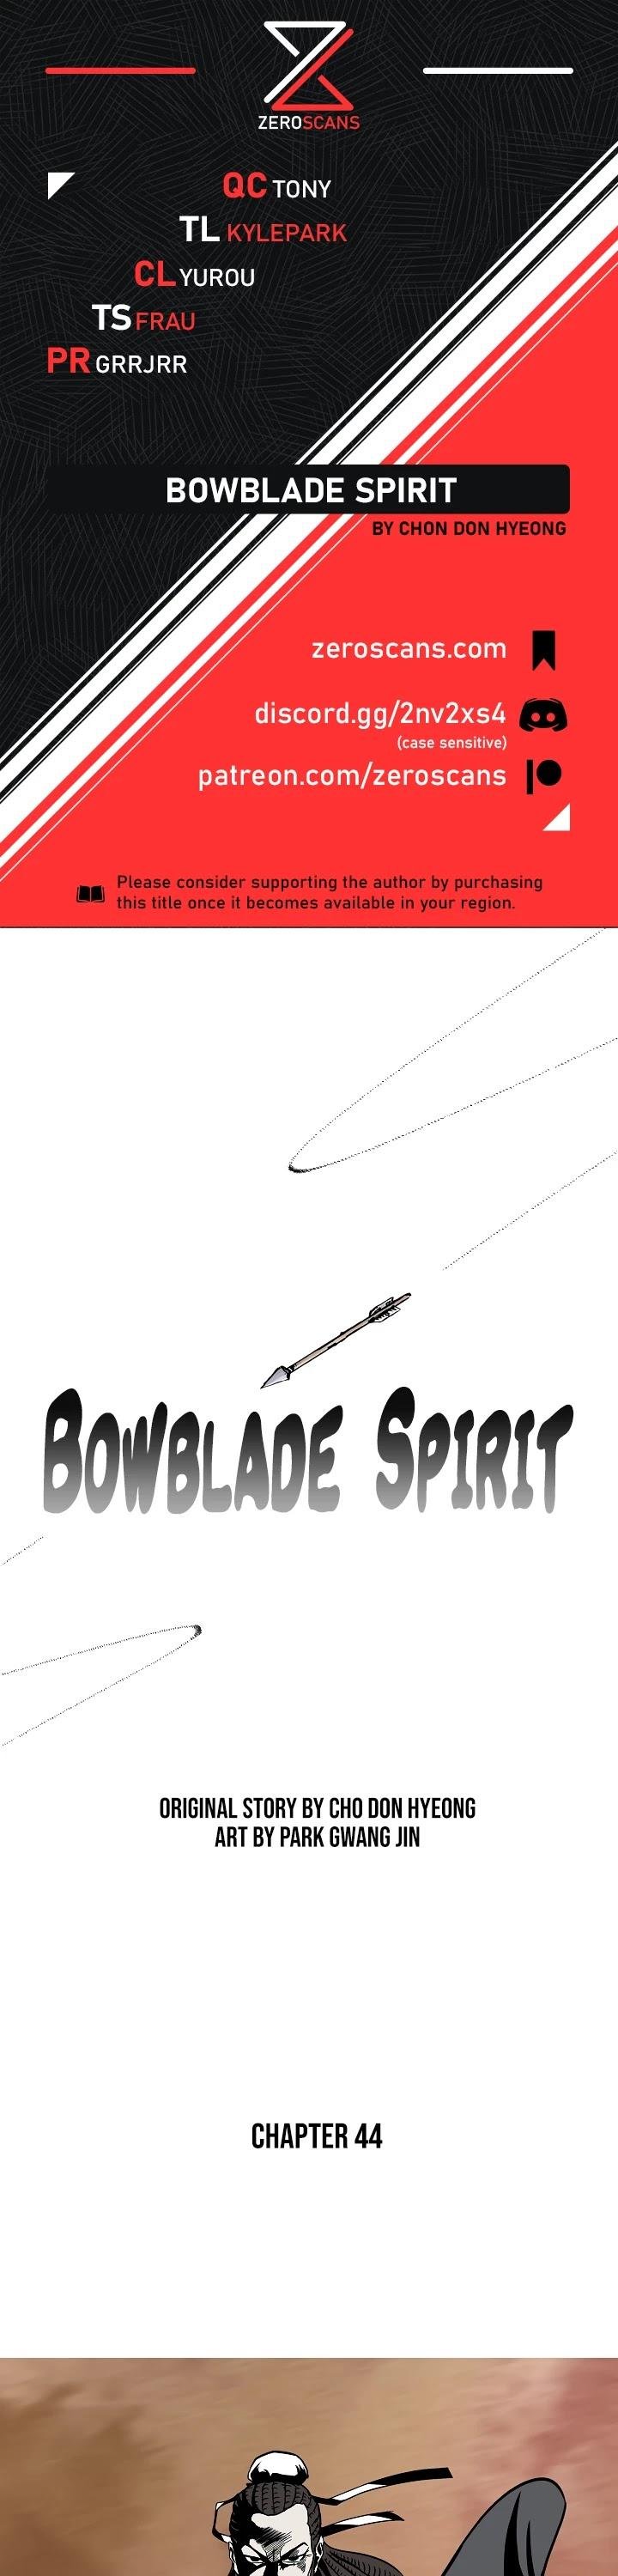 bowblade-spirit-chap-44-0